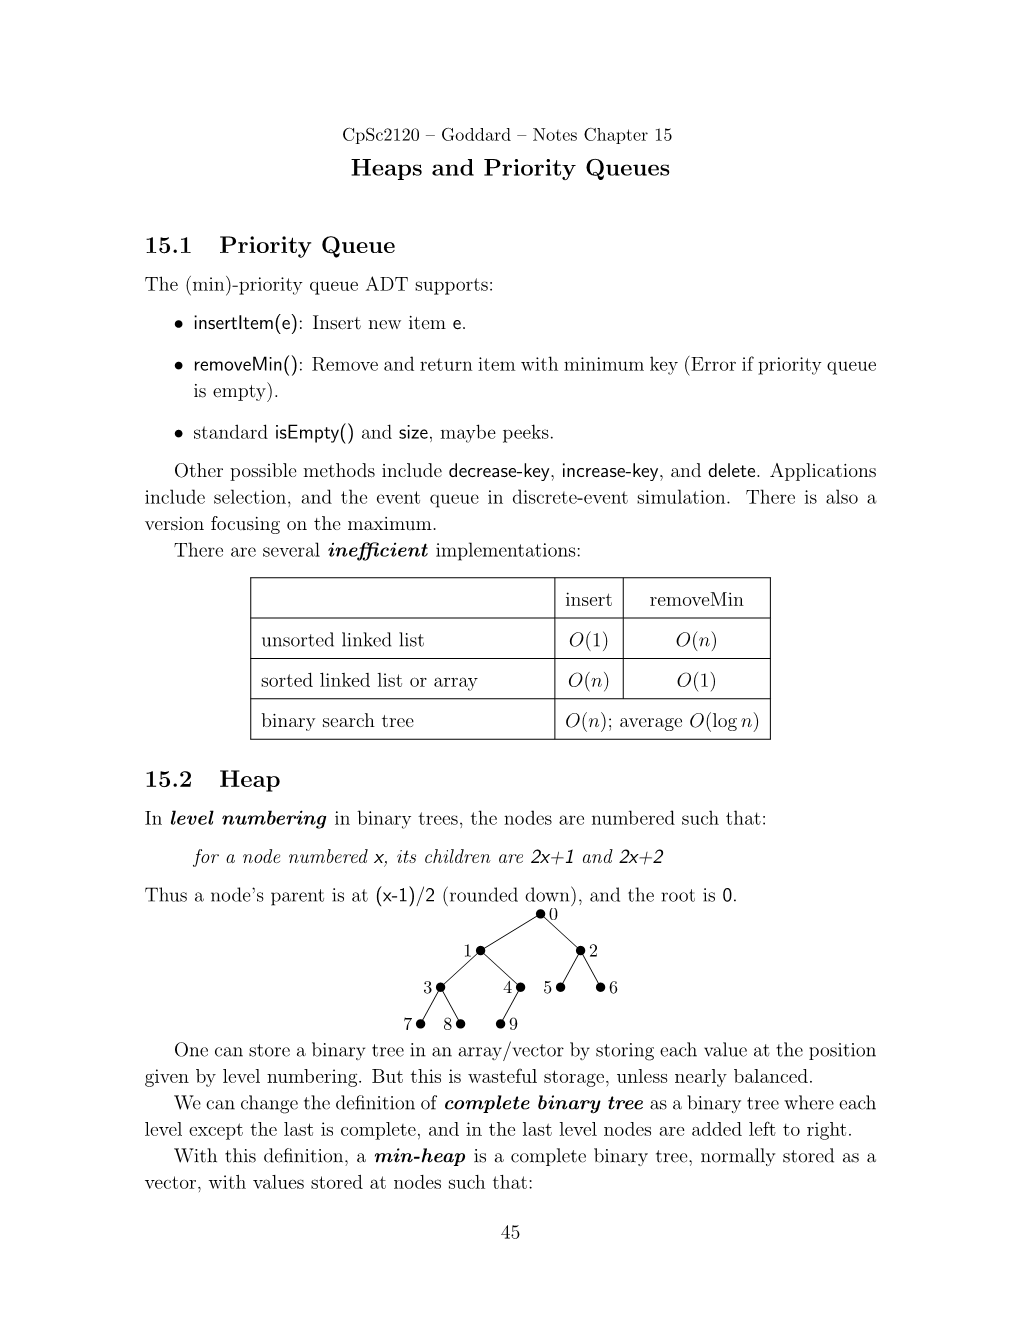 Heaps and Priority Queues 15.1 Priority Queue 15.2 Heap